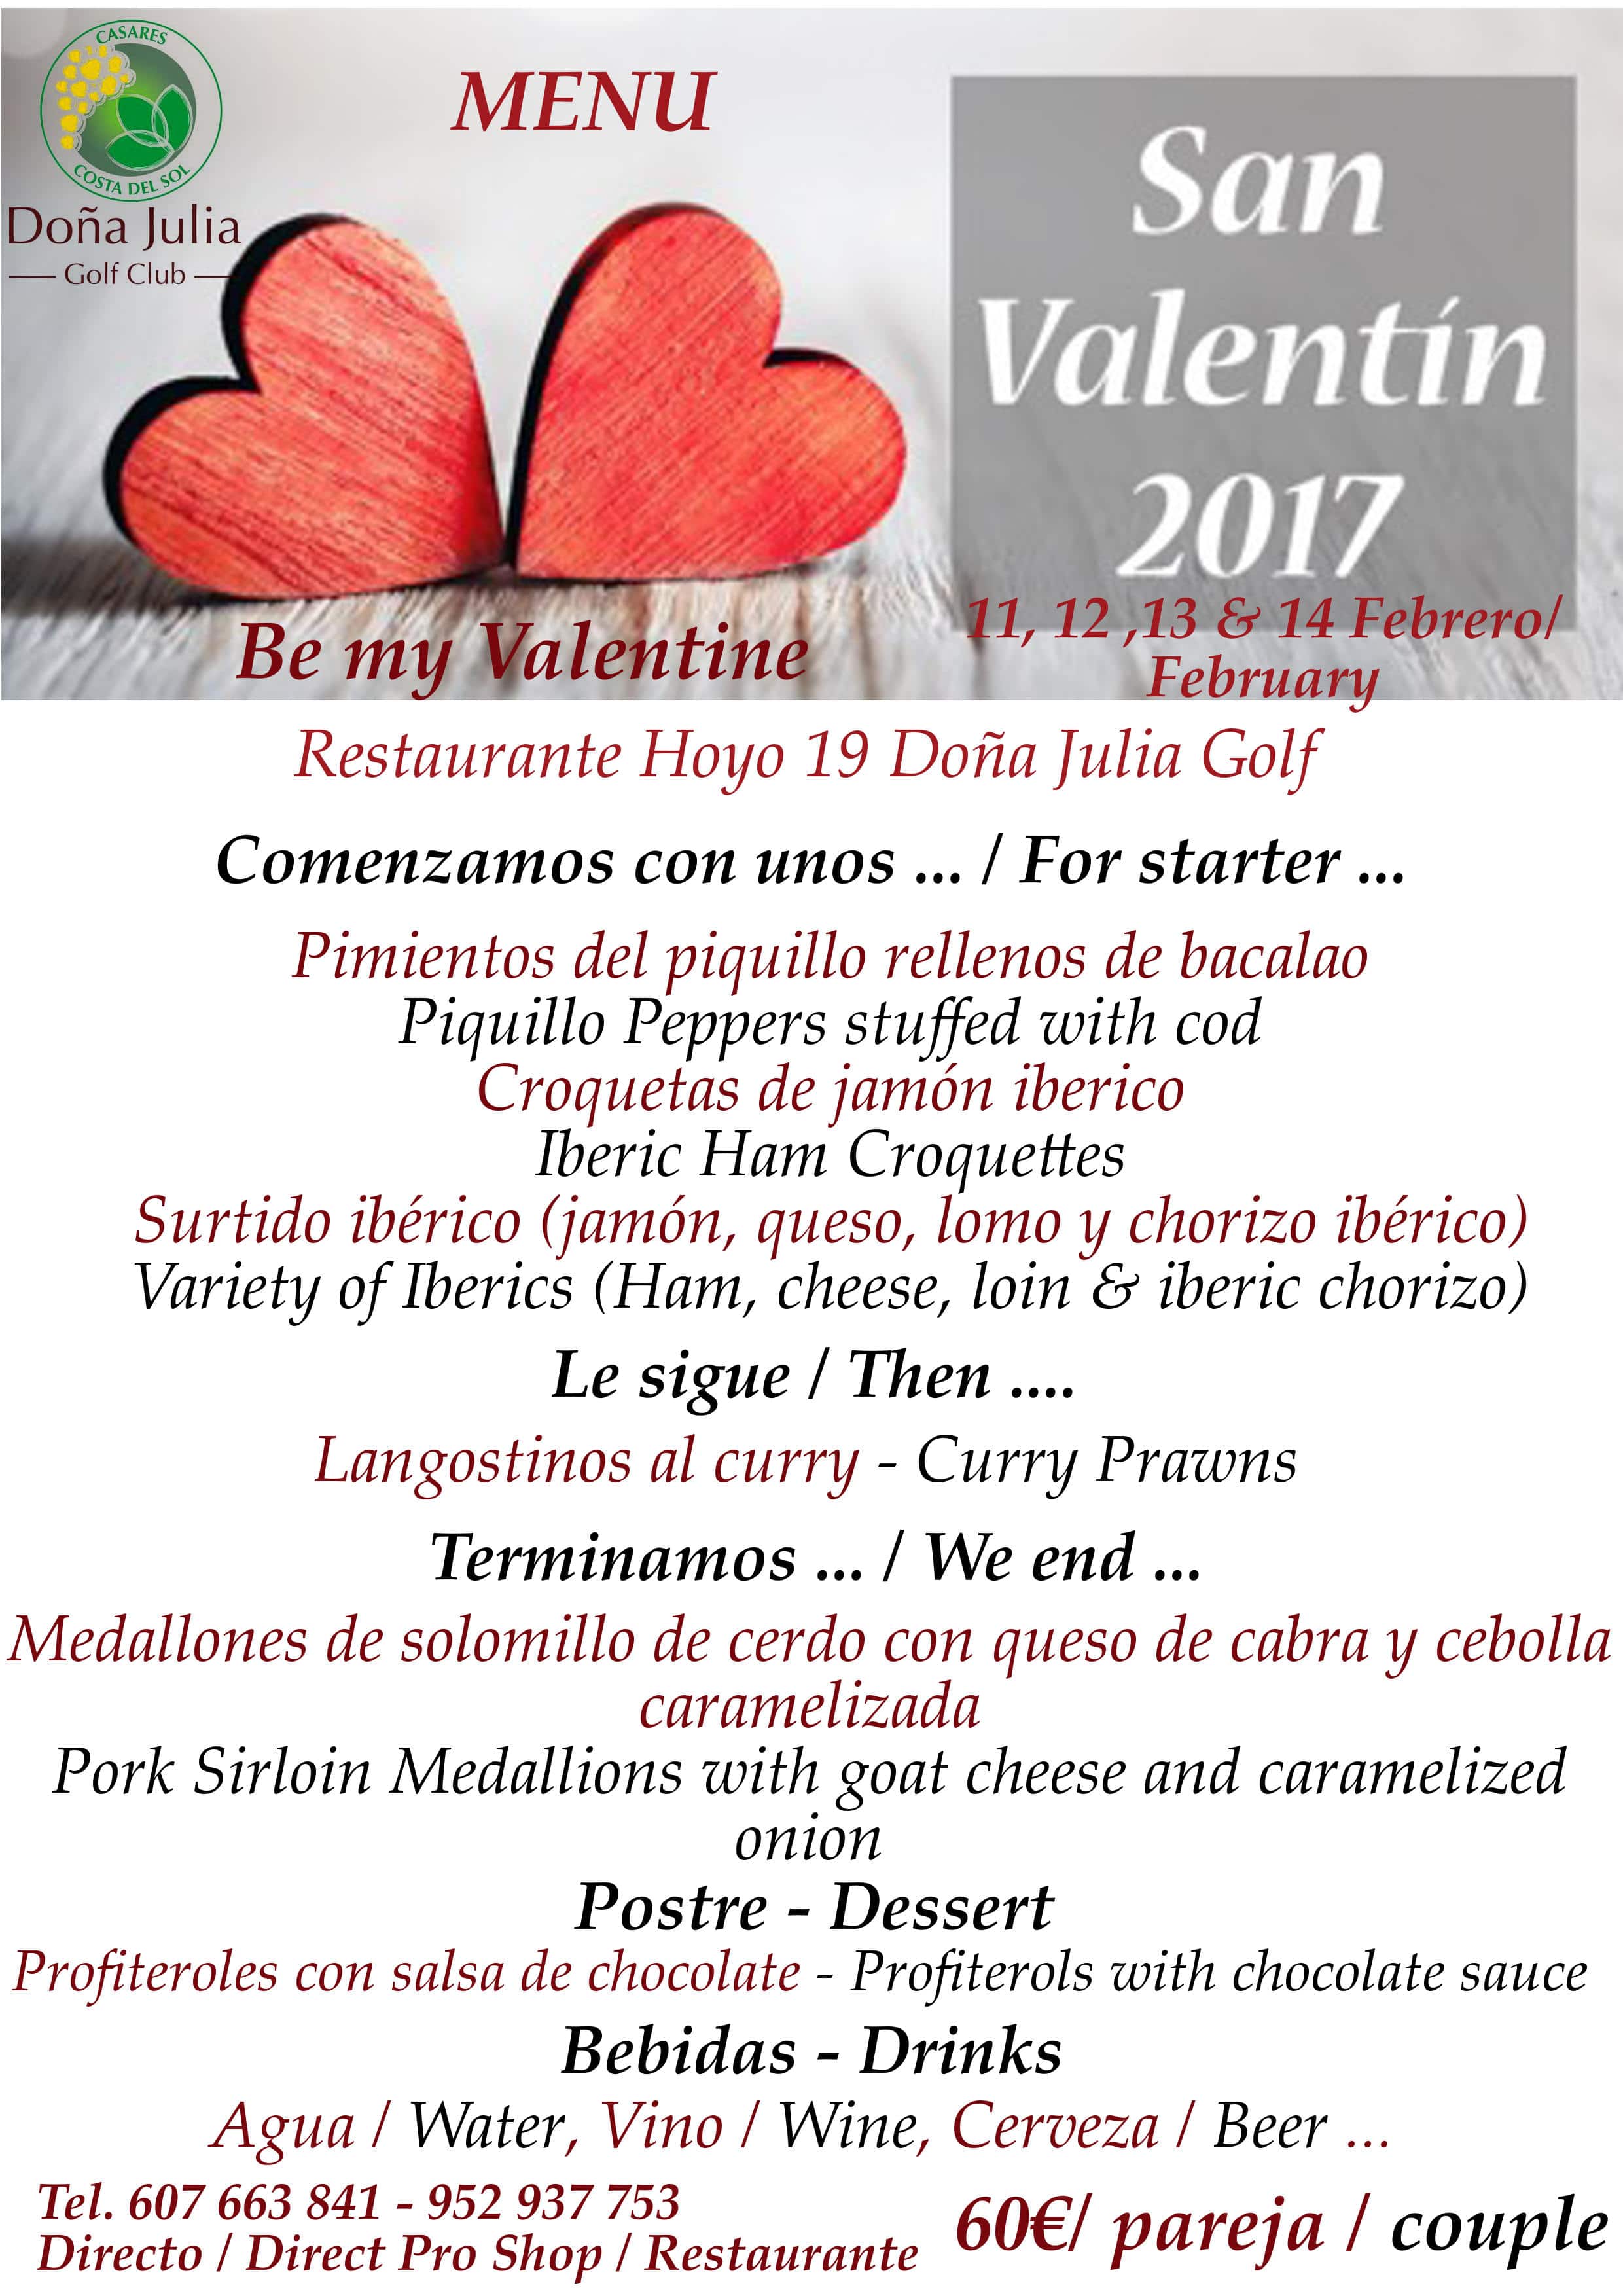 St Valentine S Day 17 At Dona Julia Golf Casares Malaga Espanadona Julia Golf Casares